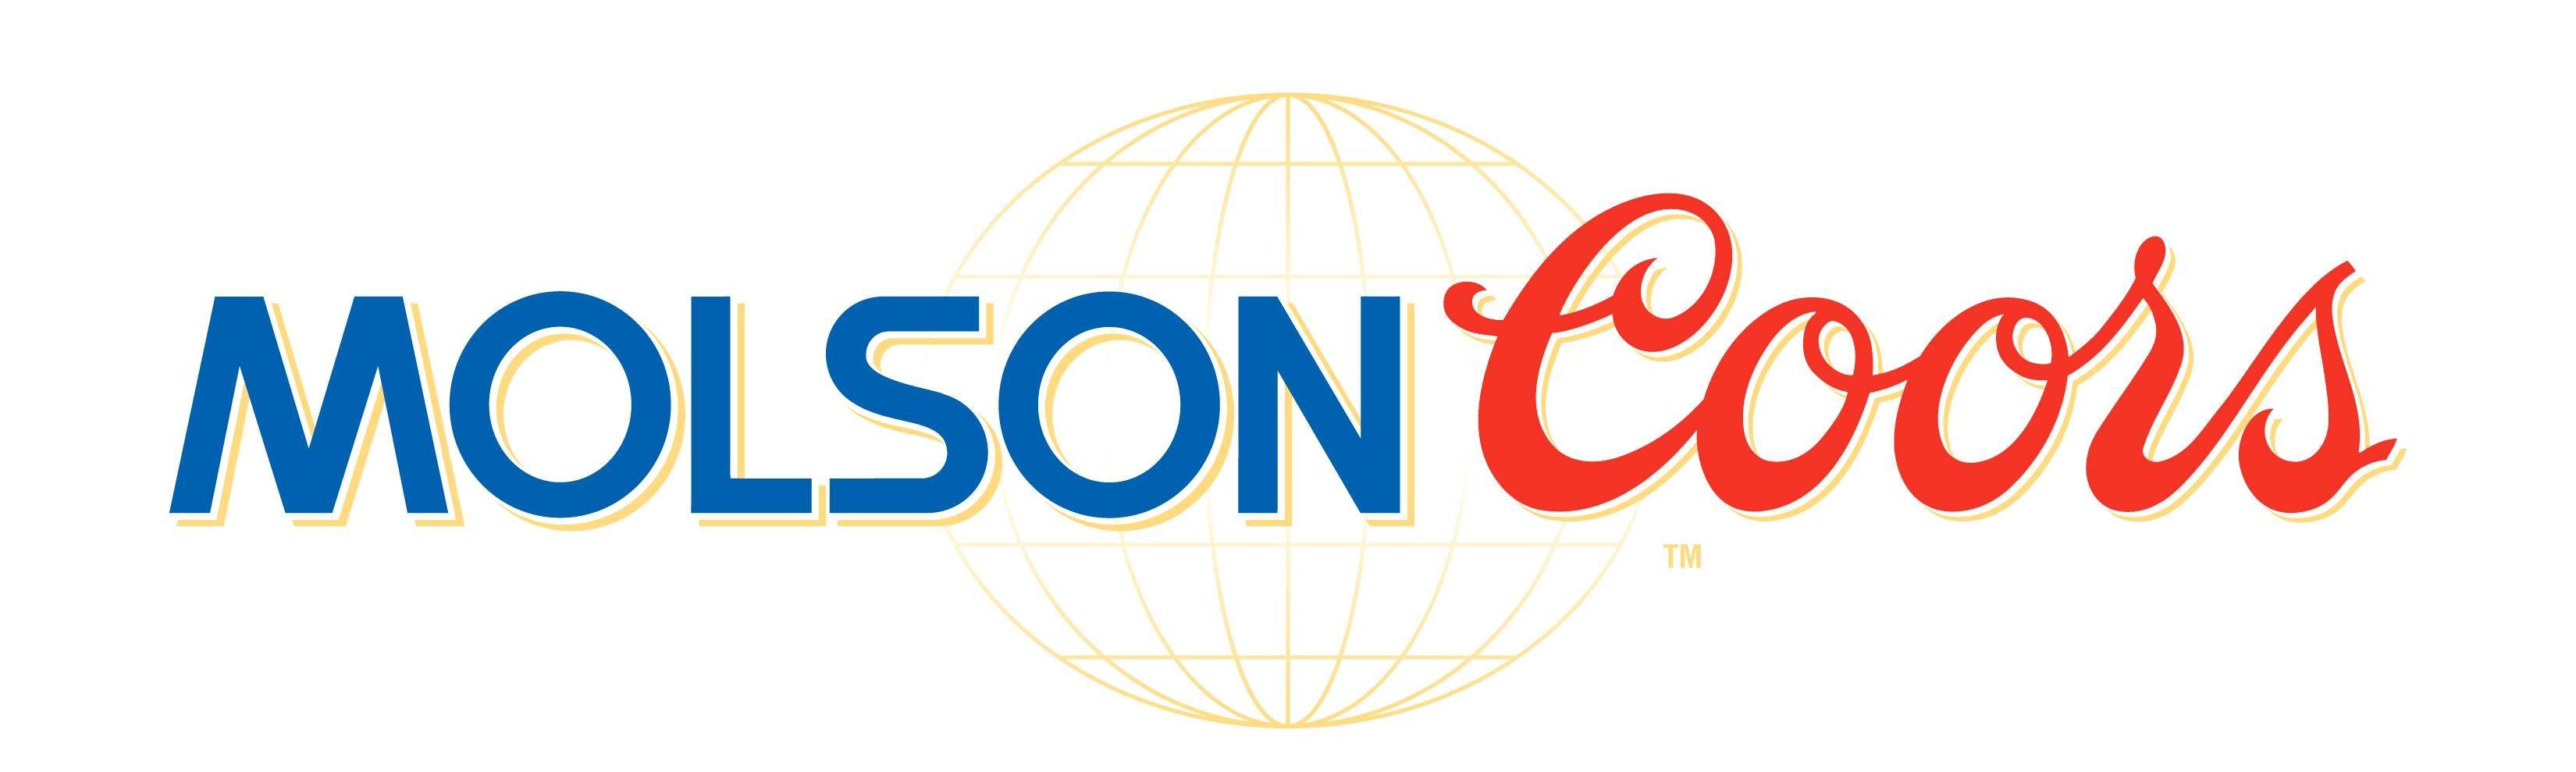 Coors Logo - Molson Coors Logo | TalentEgg Career Incubator